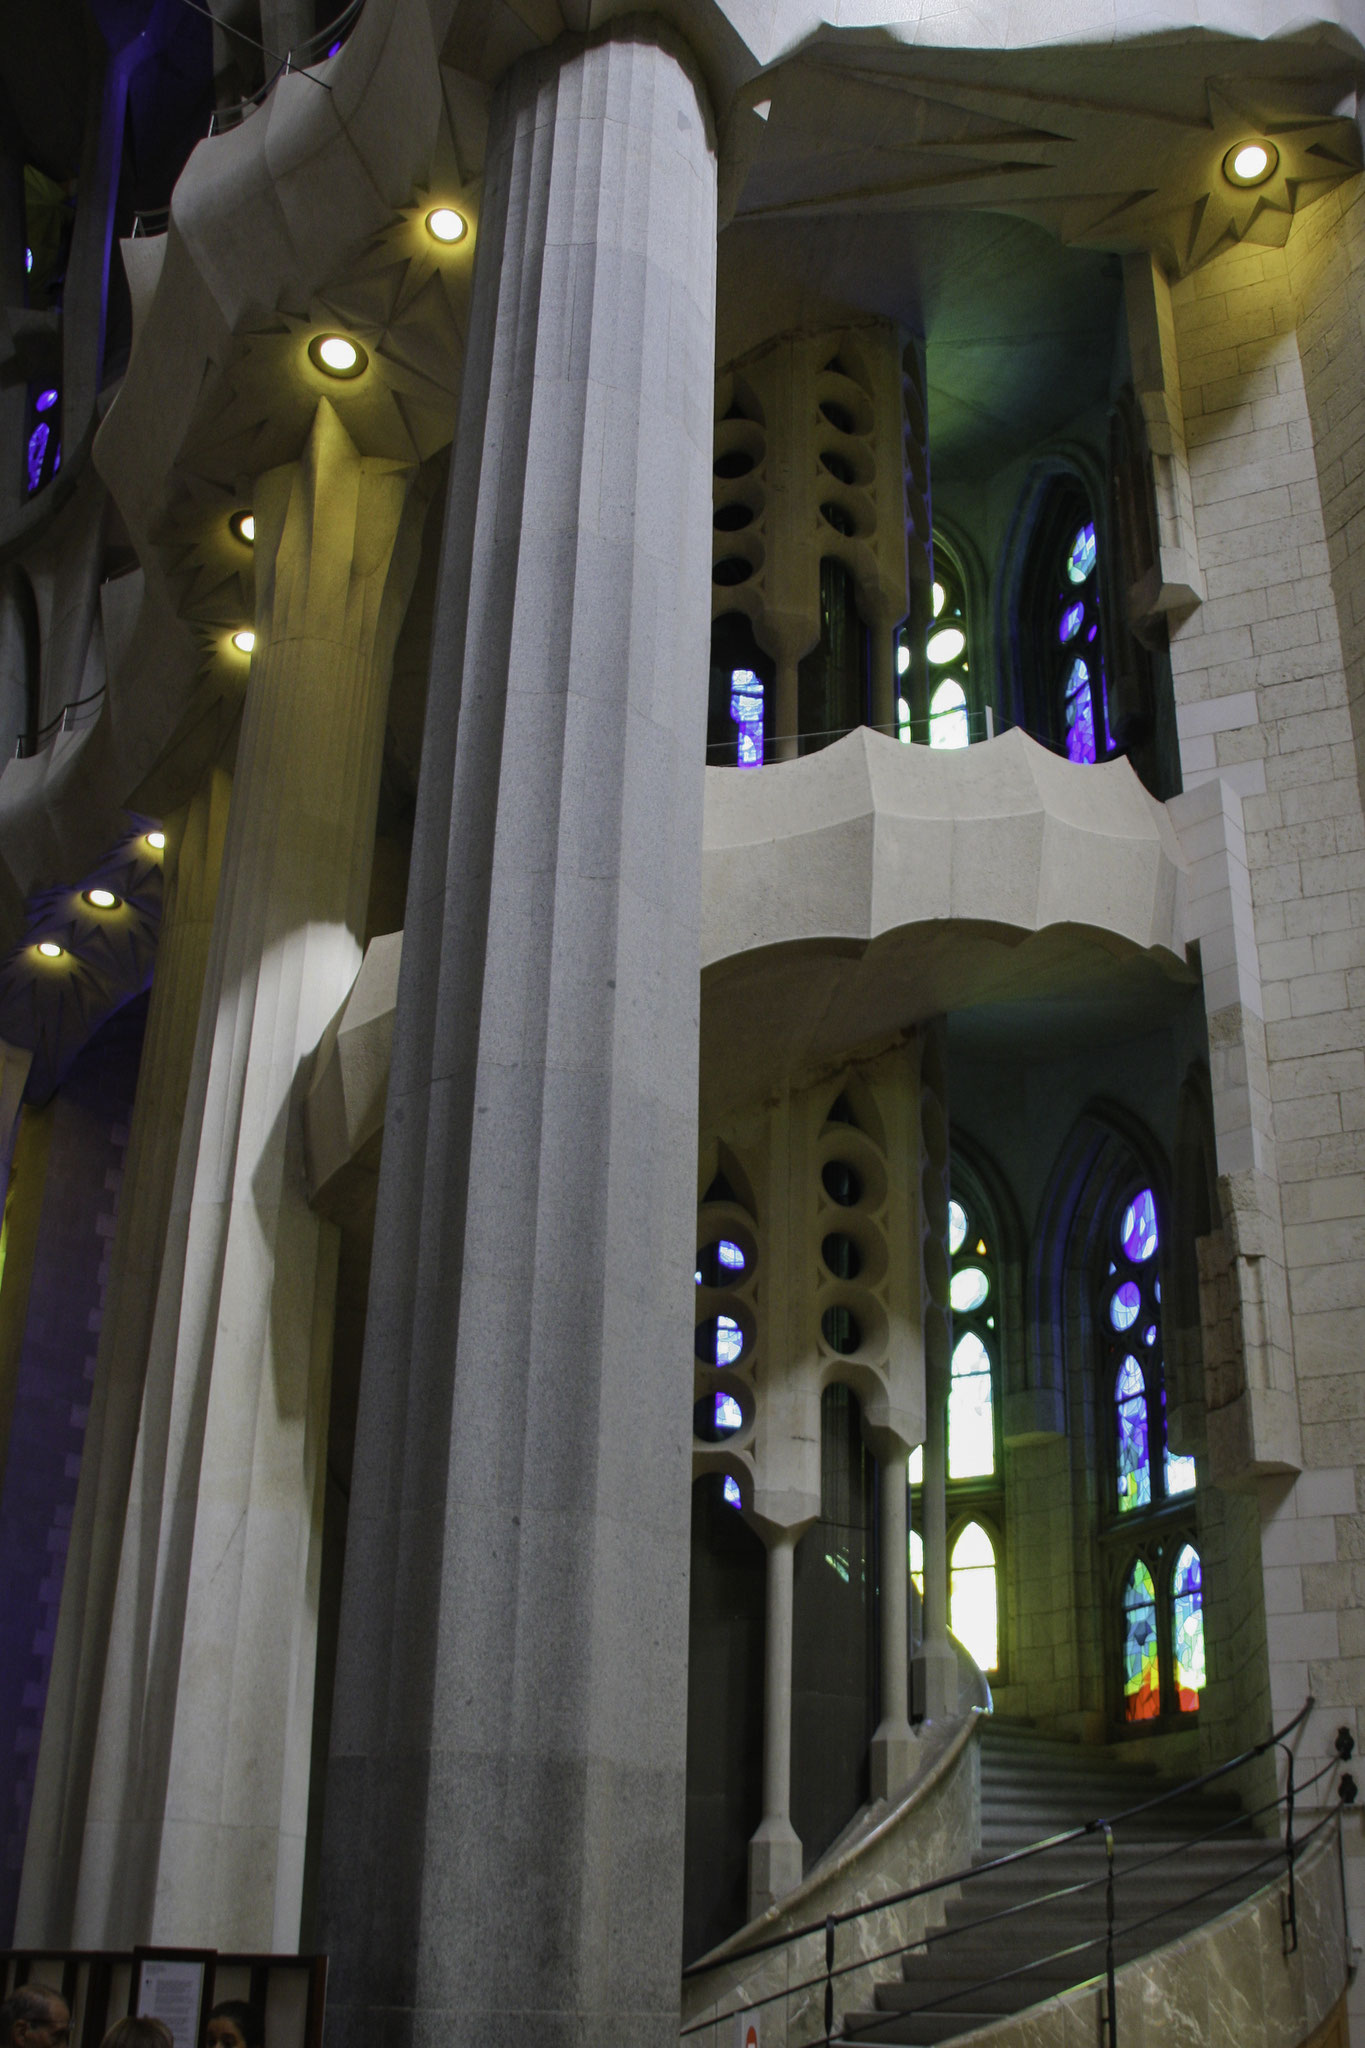 Bild: Im Innern der La Sagrada Familia 